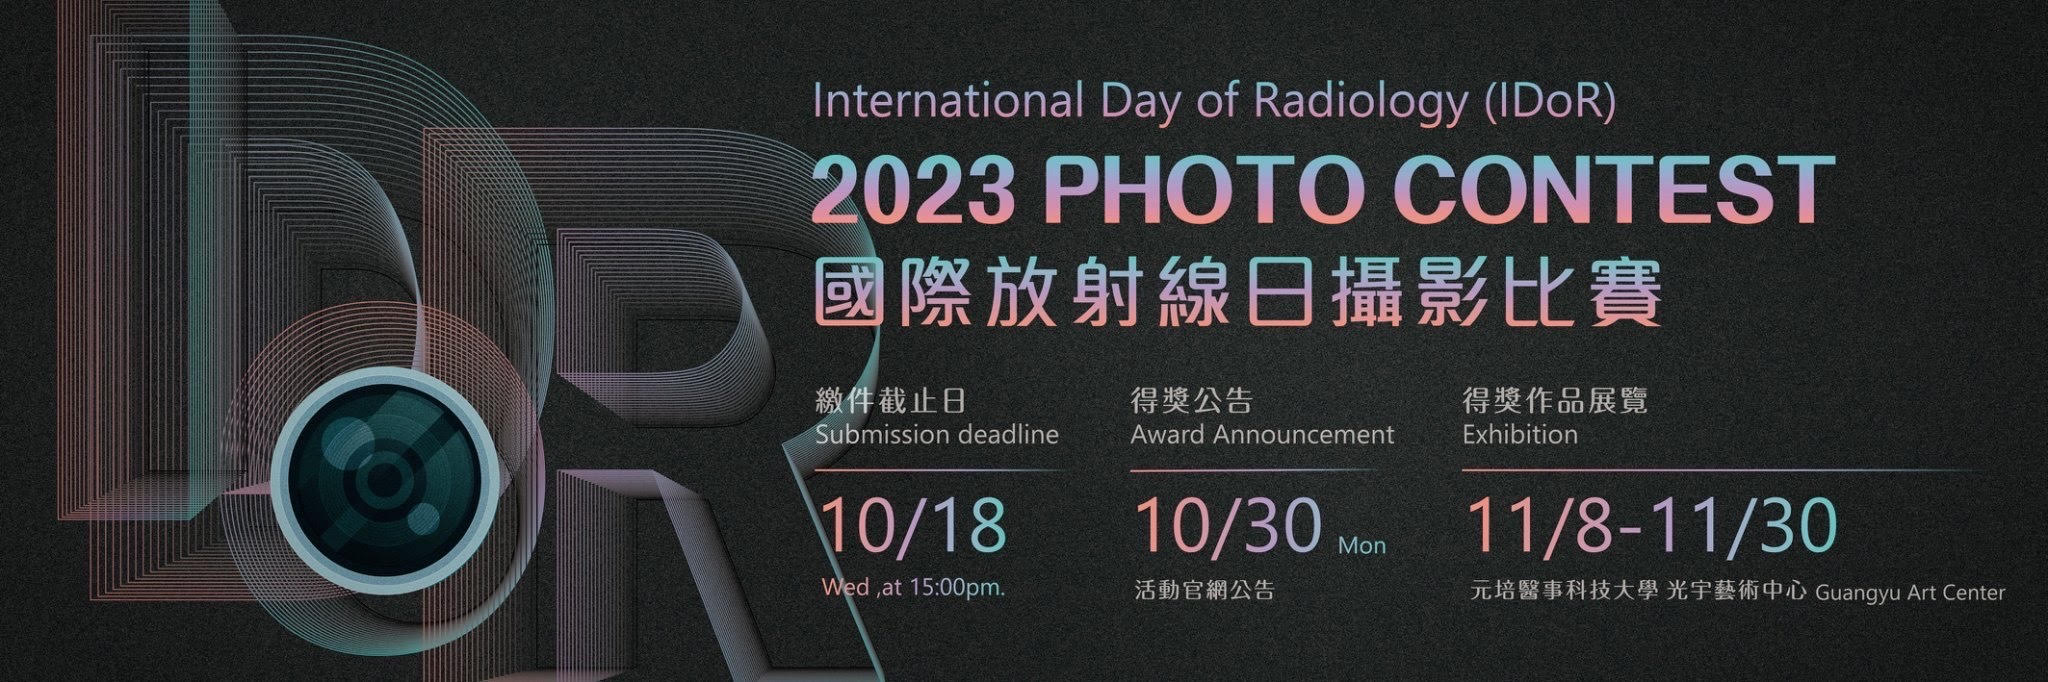 國際放射線日攝影比賽(INTERNATIONAL DAY OF RADIOLOGY PHOTO CONTEST)